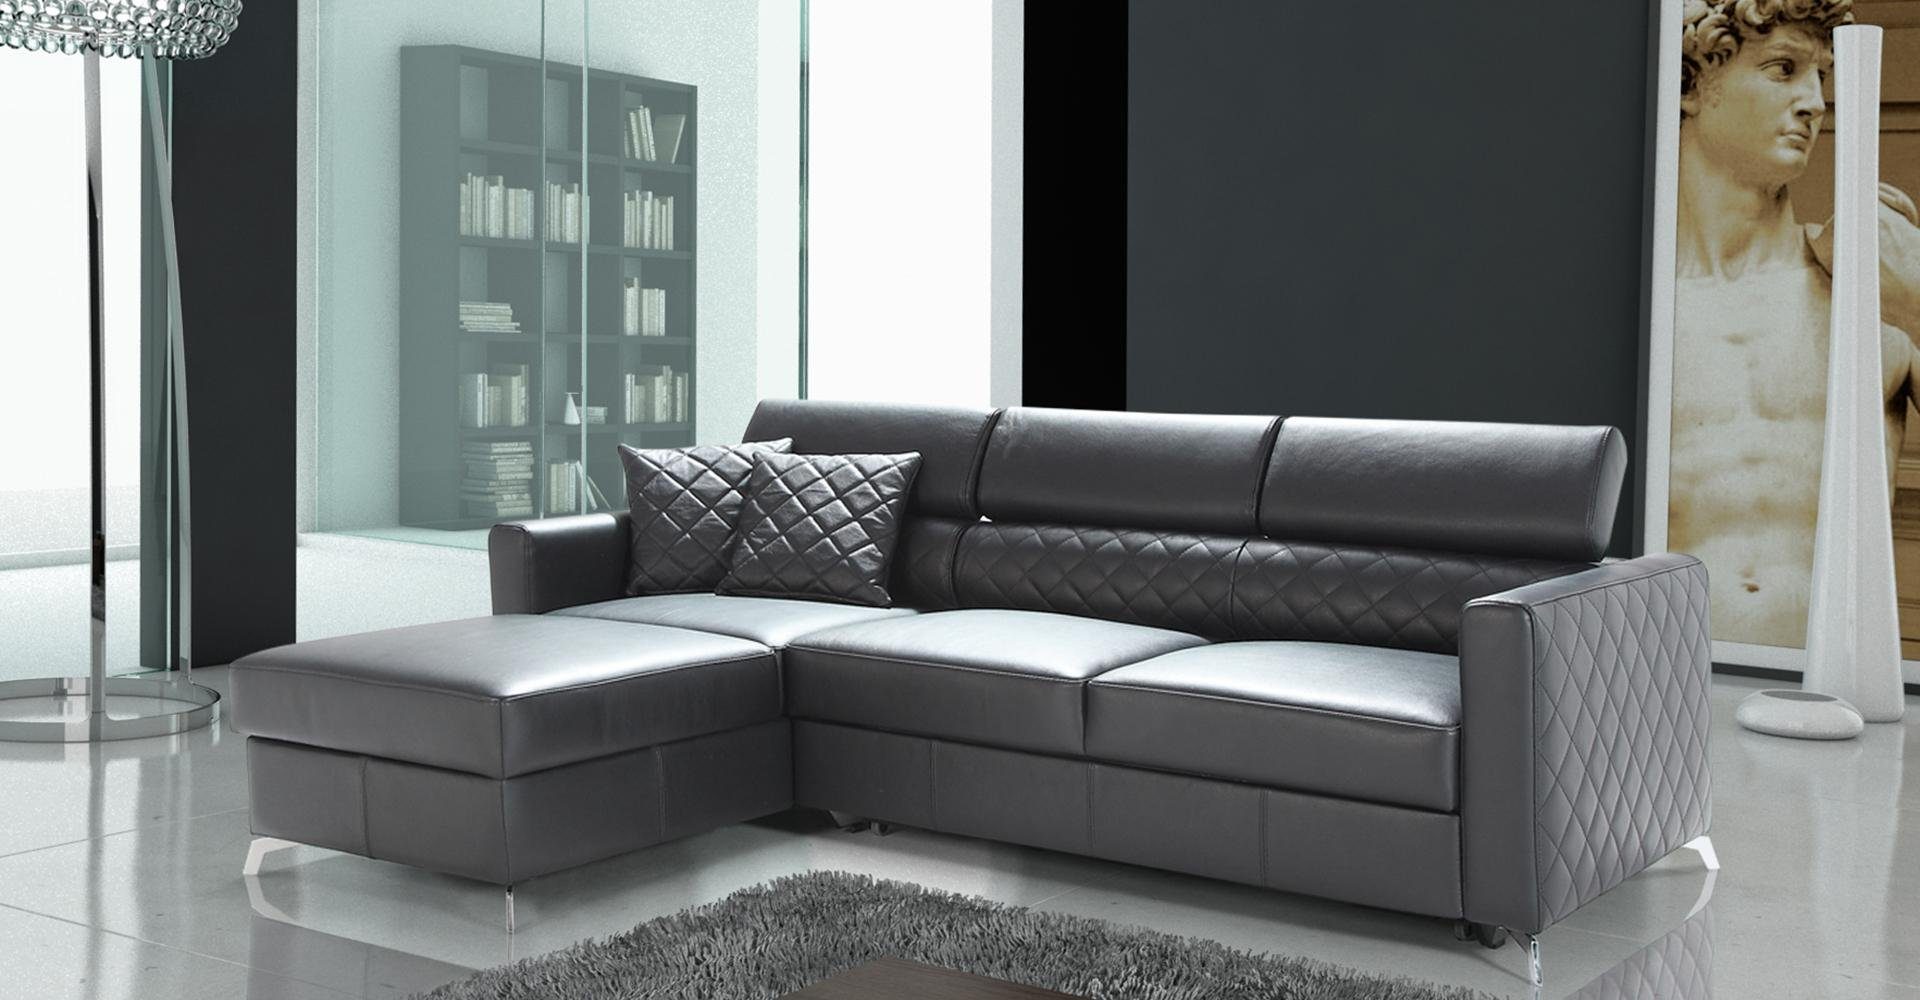 JVmoebel Ecksofa, Eсksofa Bettfunktion L-Form Couch Design Polster Textil 100% Schwarz